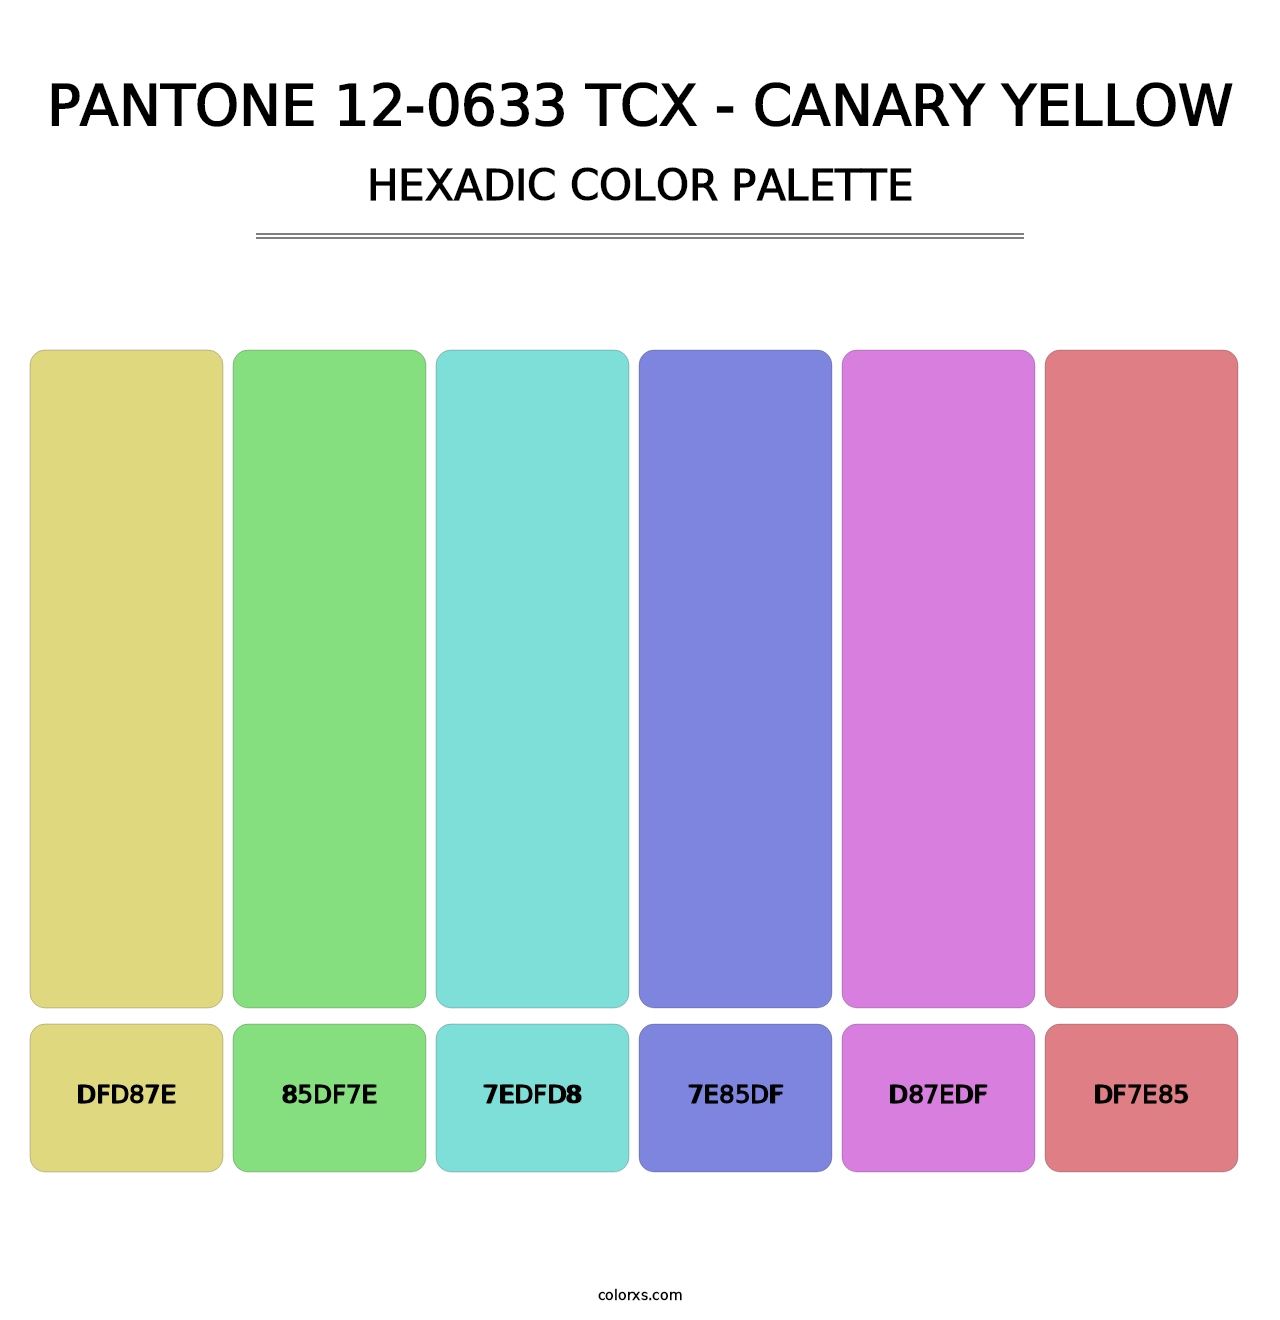 PANTONE 12-0633 TCX - Canary Yellow - Hexadic Color Palette